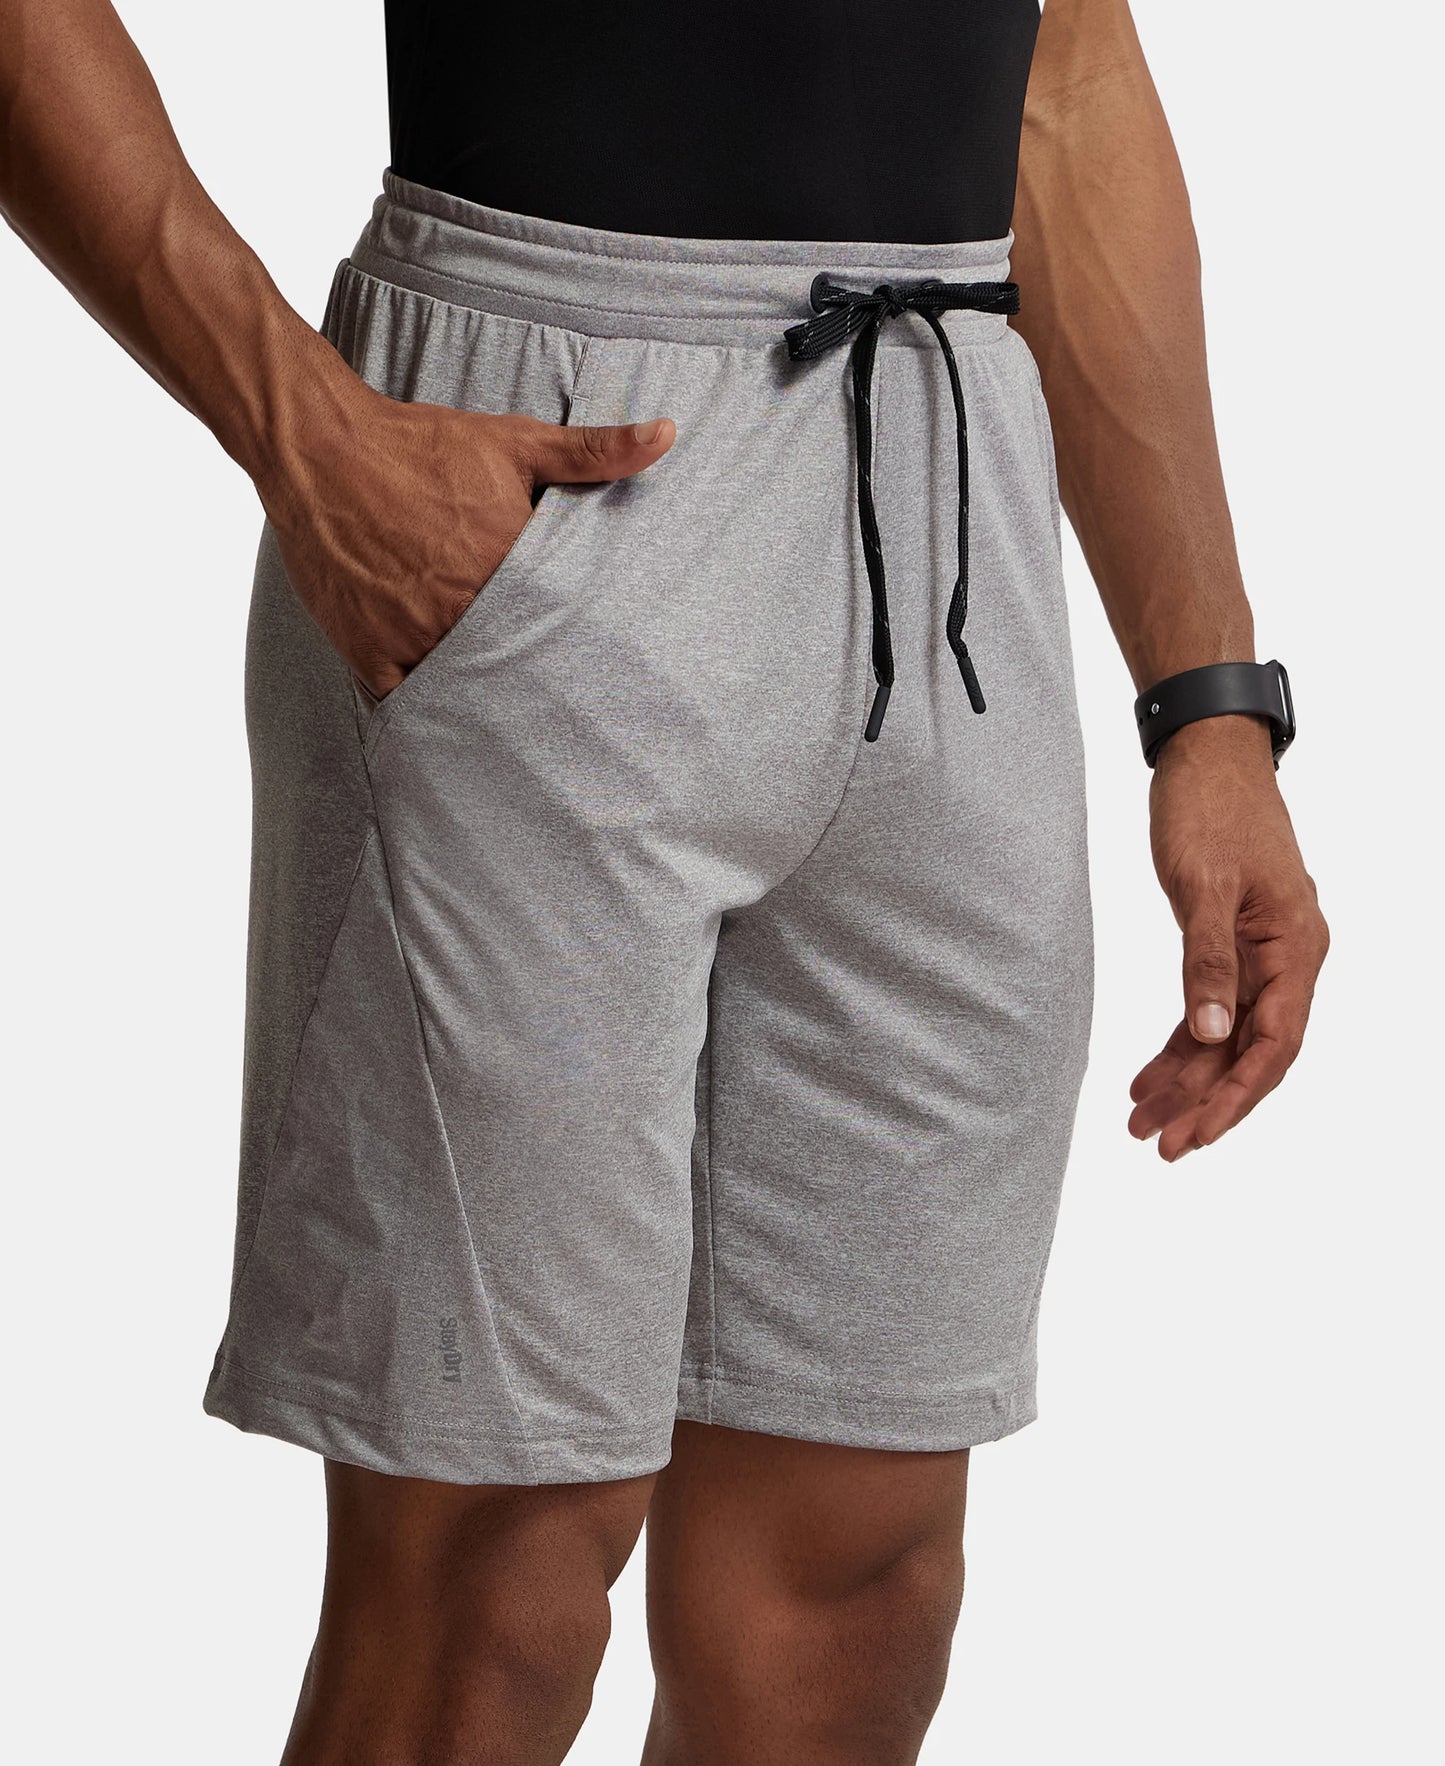 Microfiber Elastane Stretch Solid Shorts with Zipper Media Pocket and StayFresh Treatment - Light Steel Grey-2